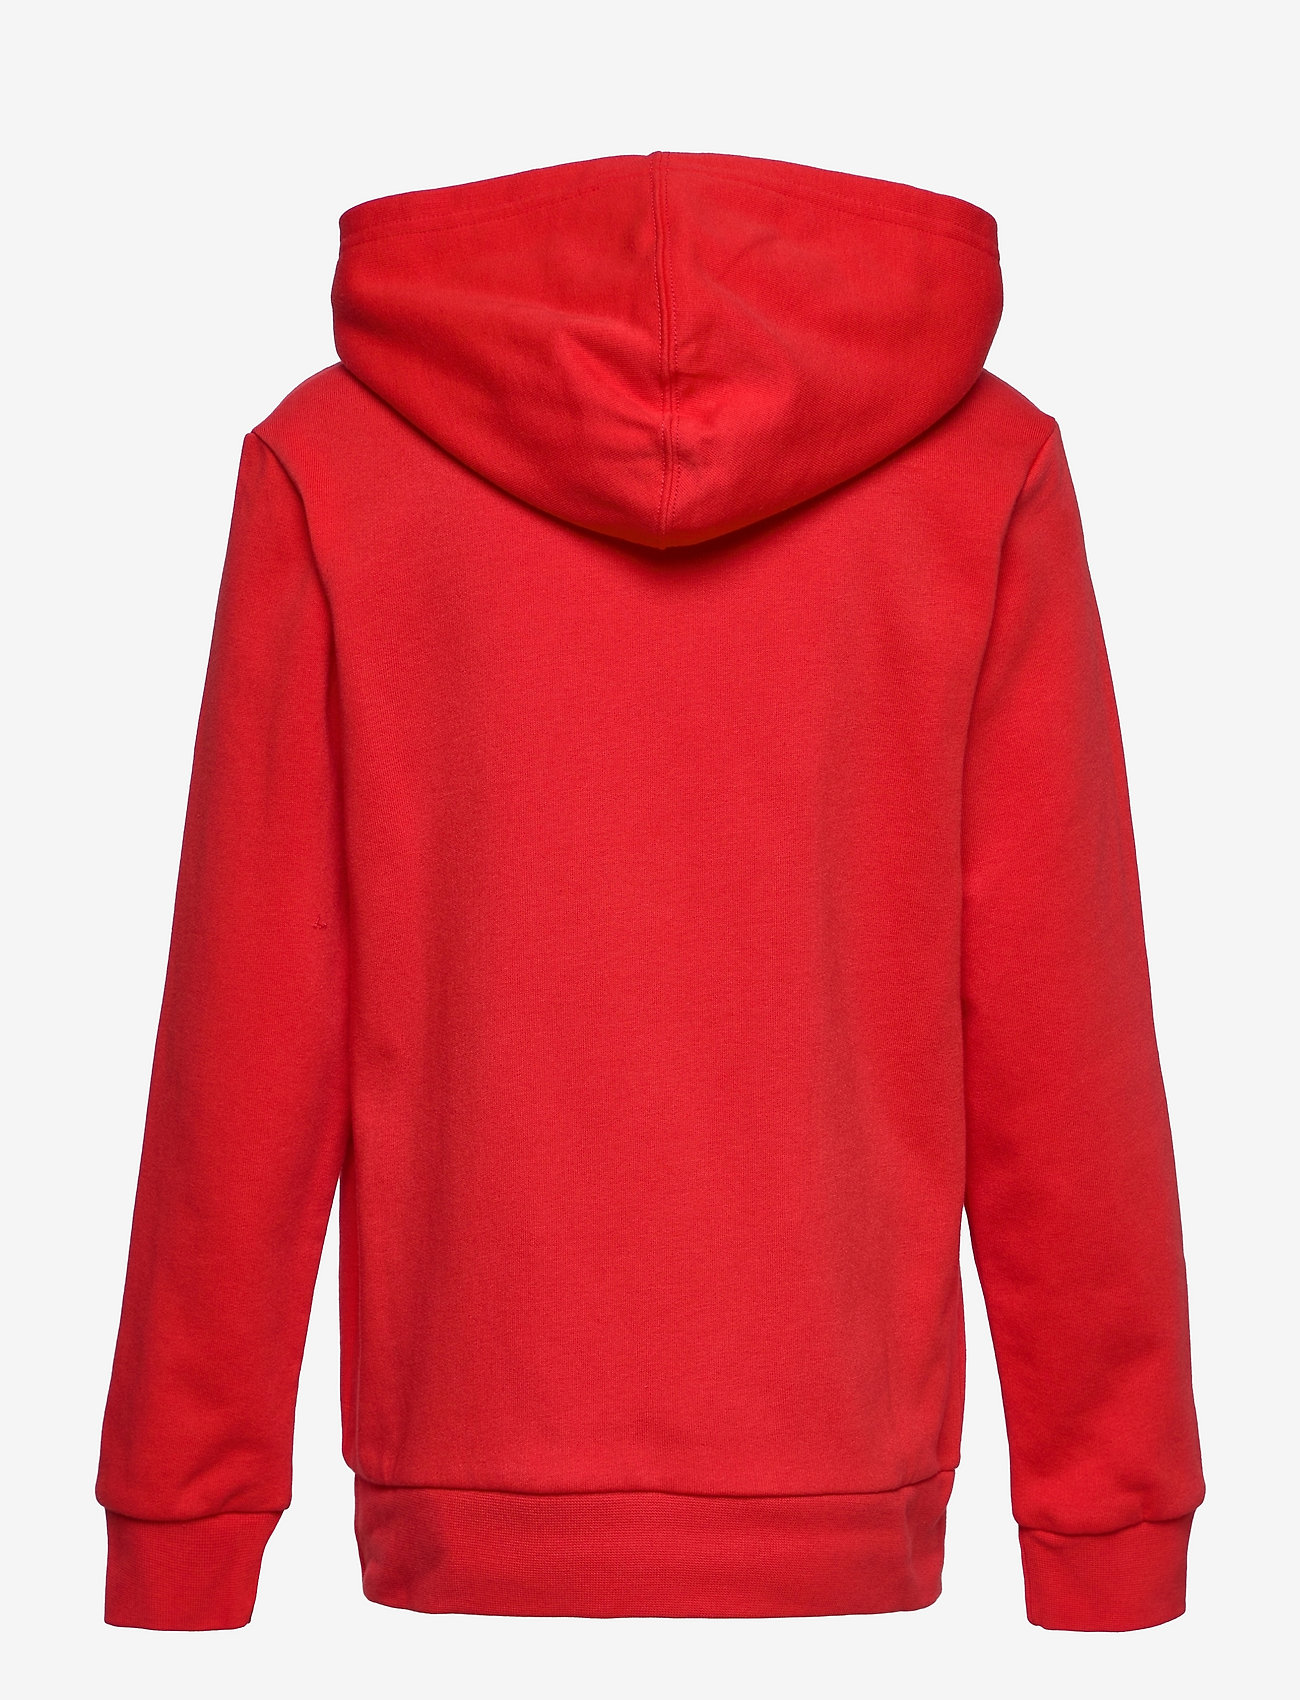 Champion - Hooded Sweatshirt - hoodies - high risk red - 1